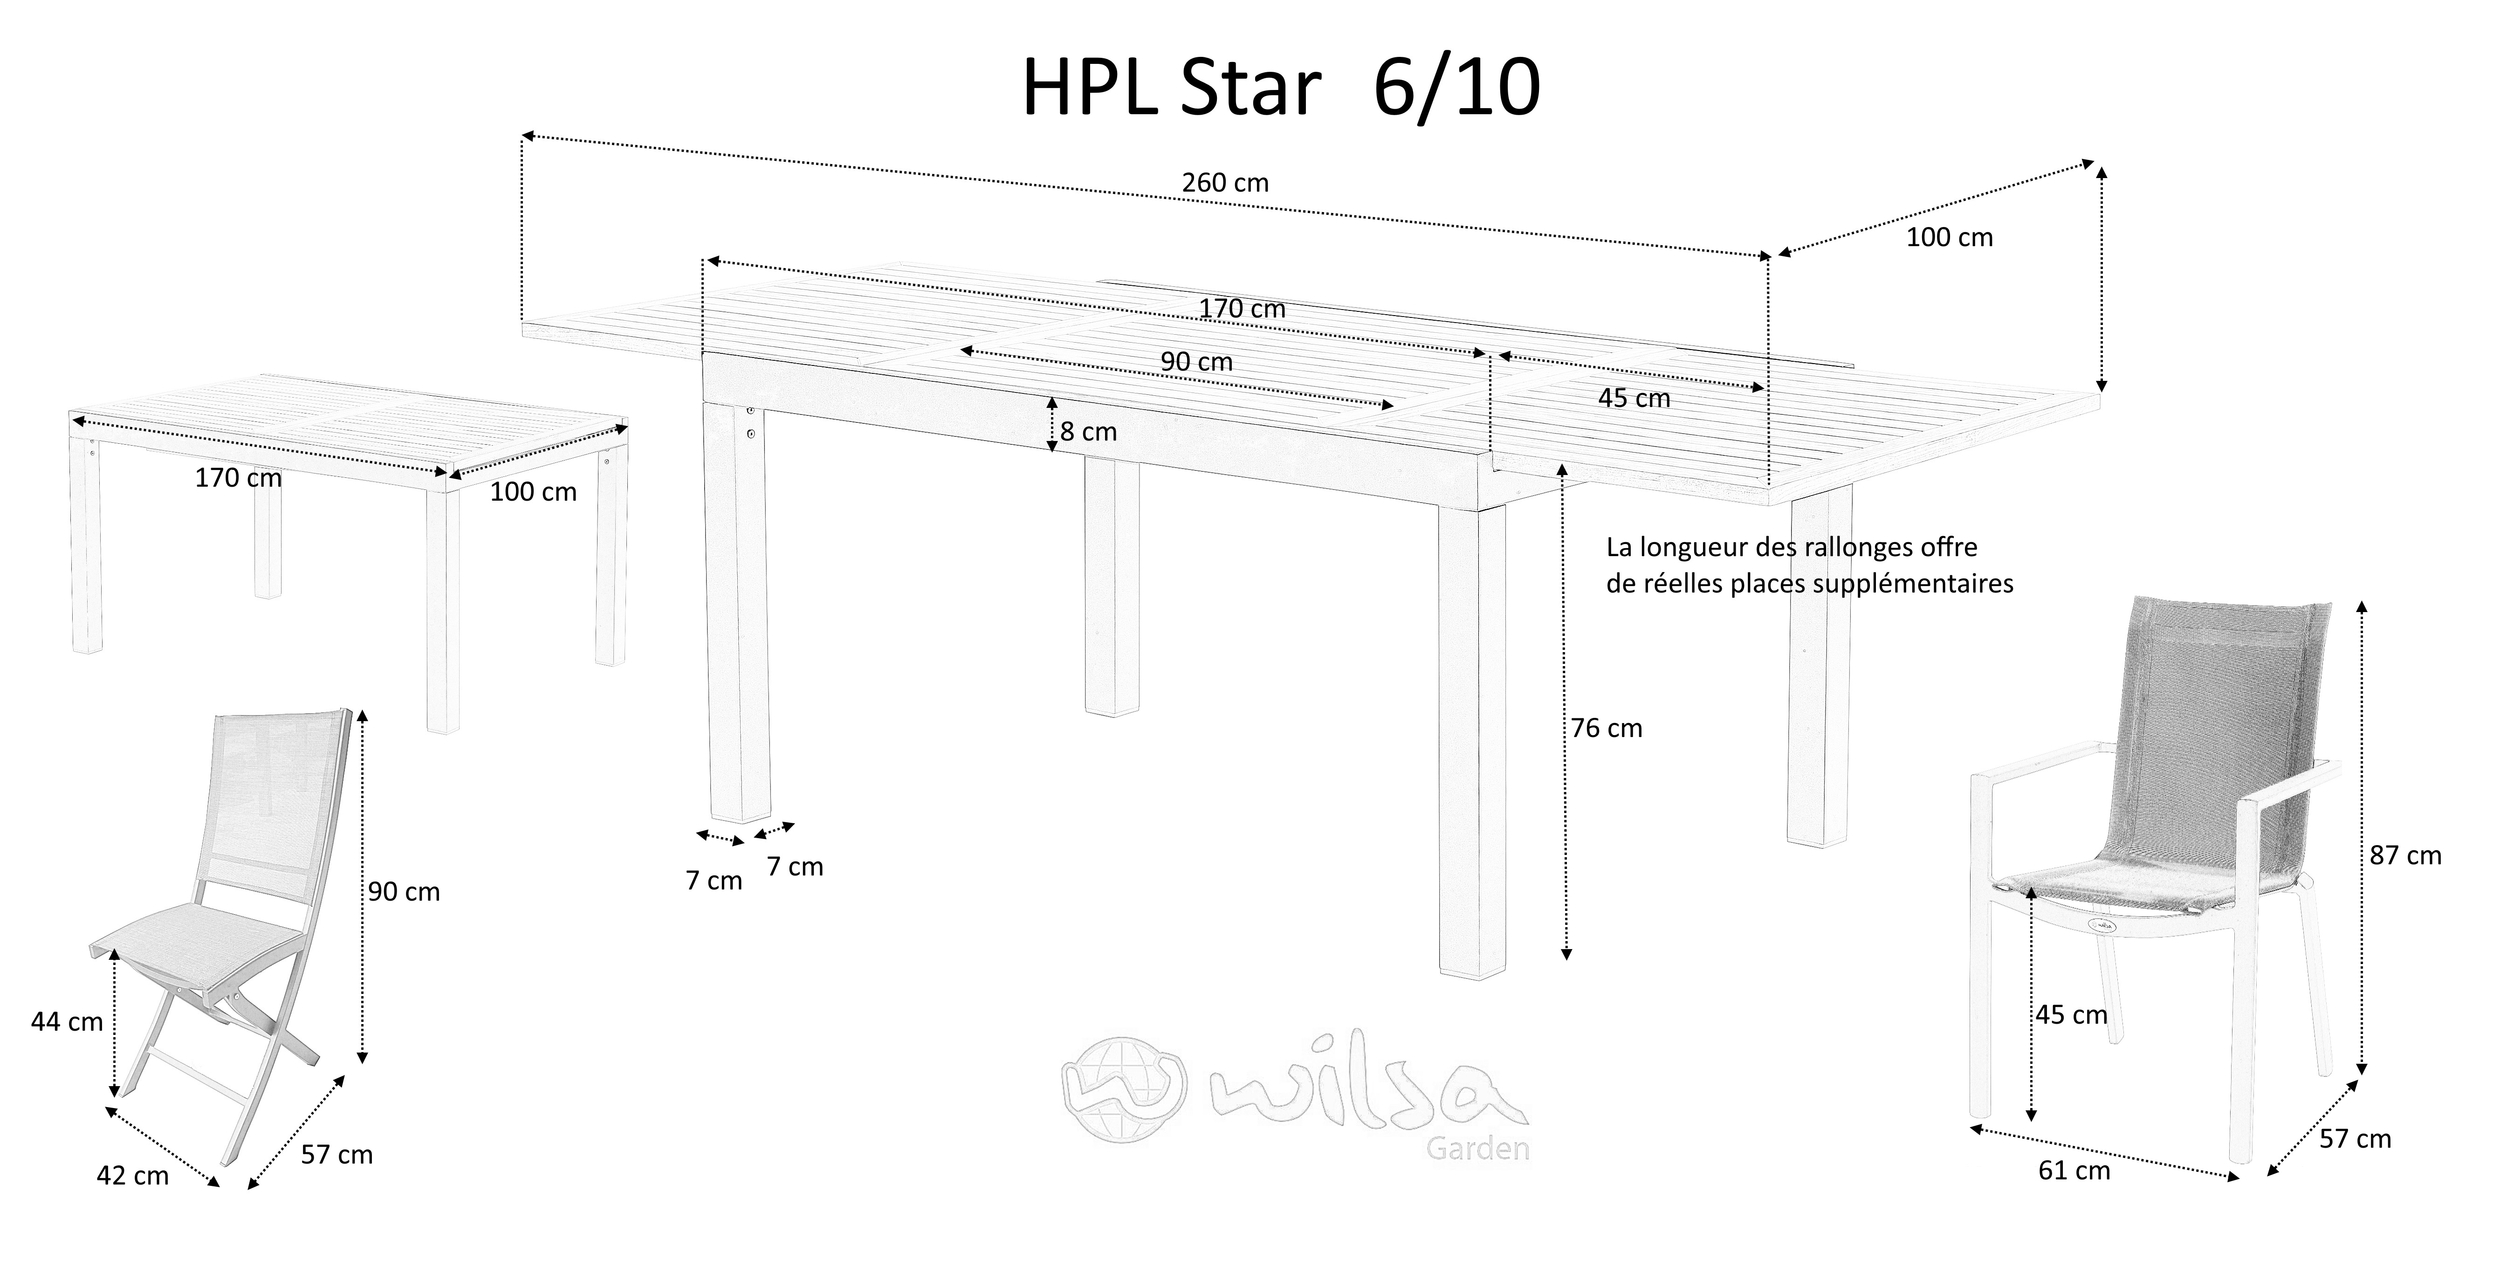 HPL Star 6-10